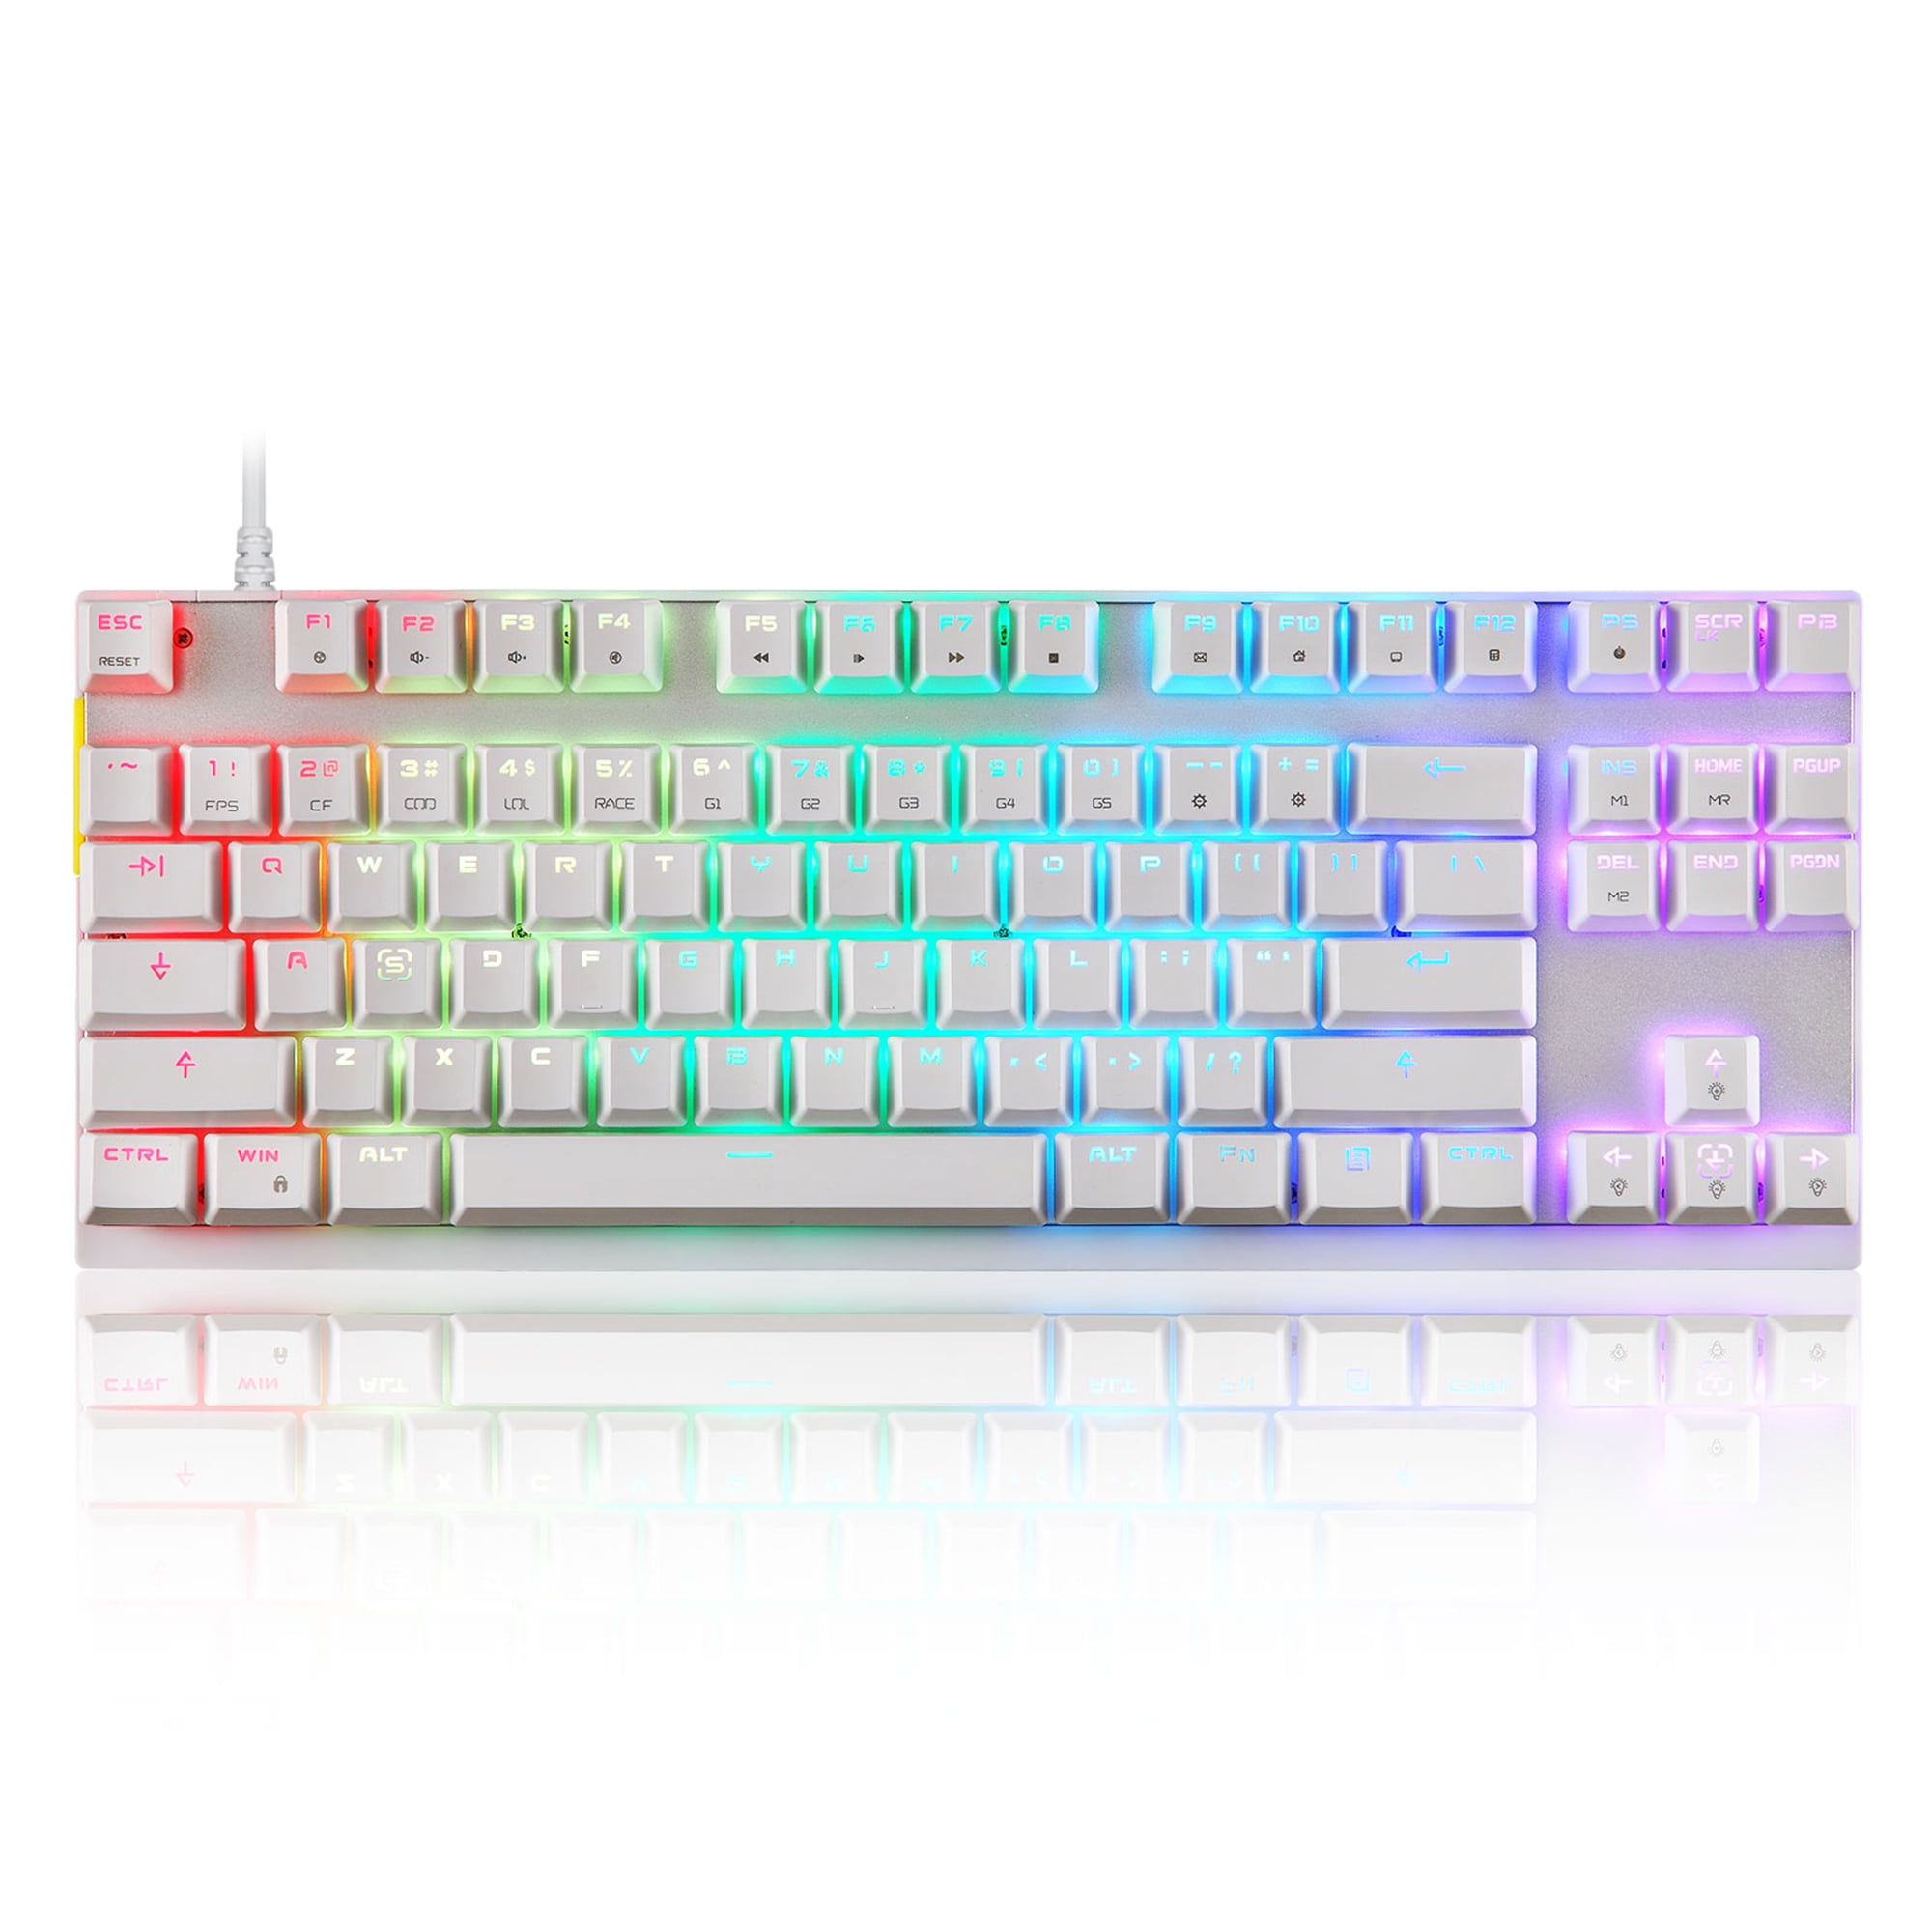 Motospeed Professional Gaming Mechanical Keyboard RGB Led Backlit Wired ...